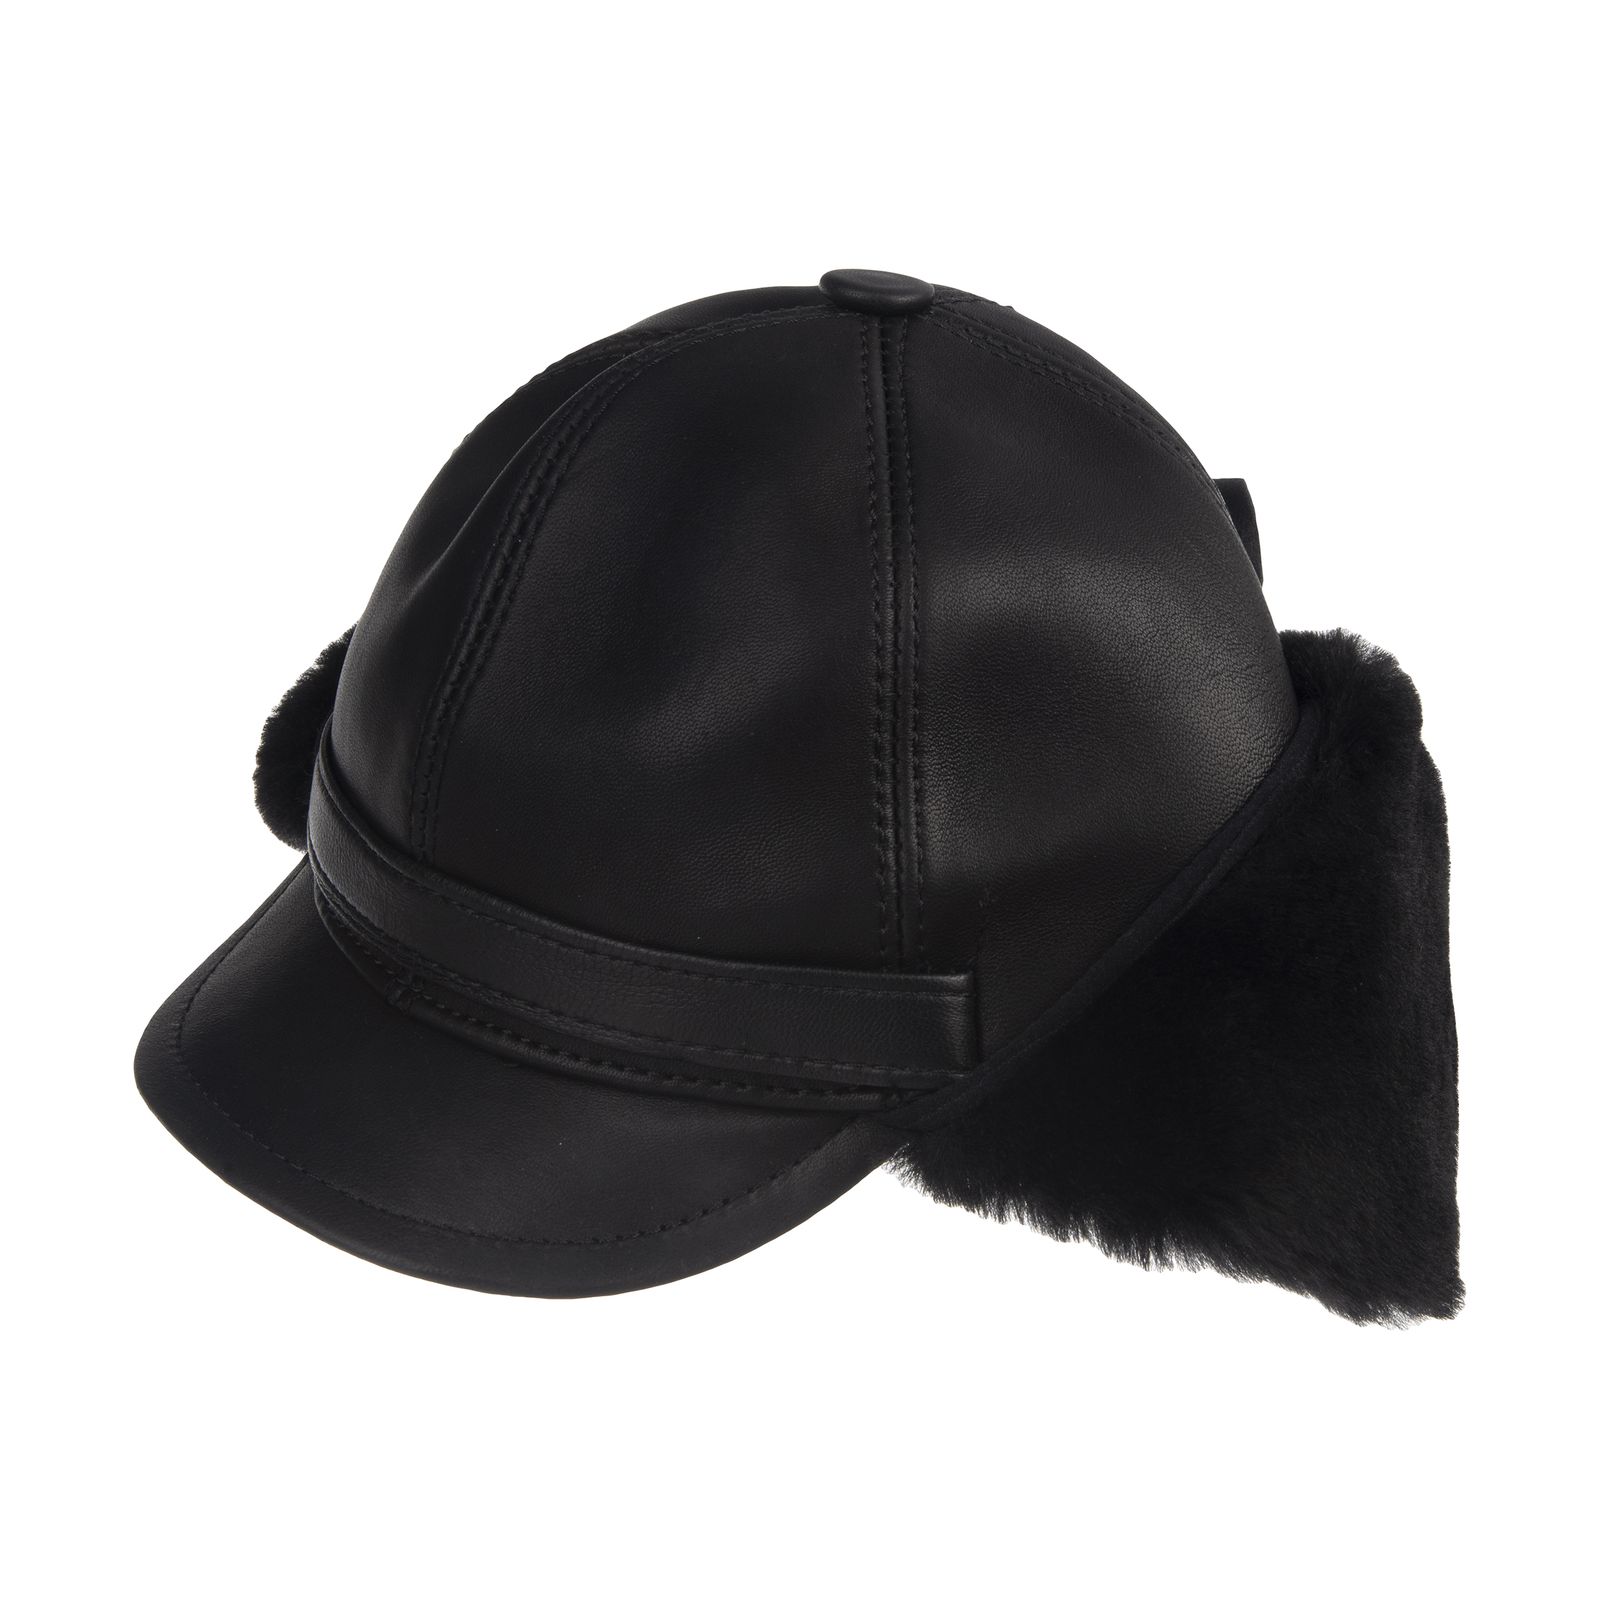 کلاه مردانه شیفر مدل 8713A01 - مشکی - 1